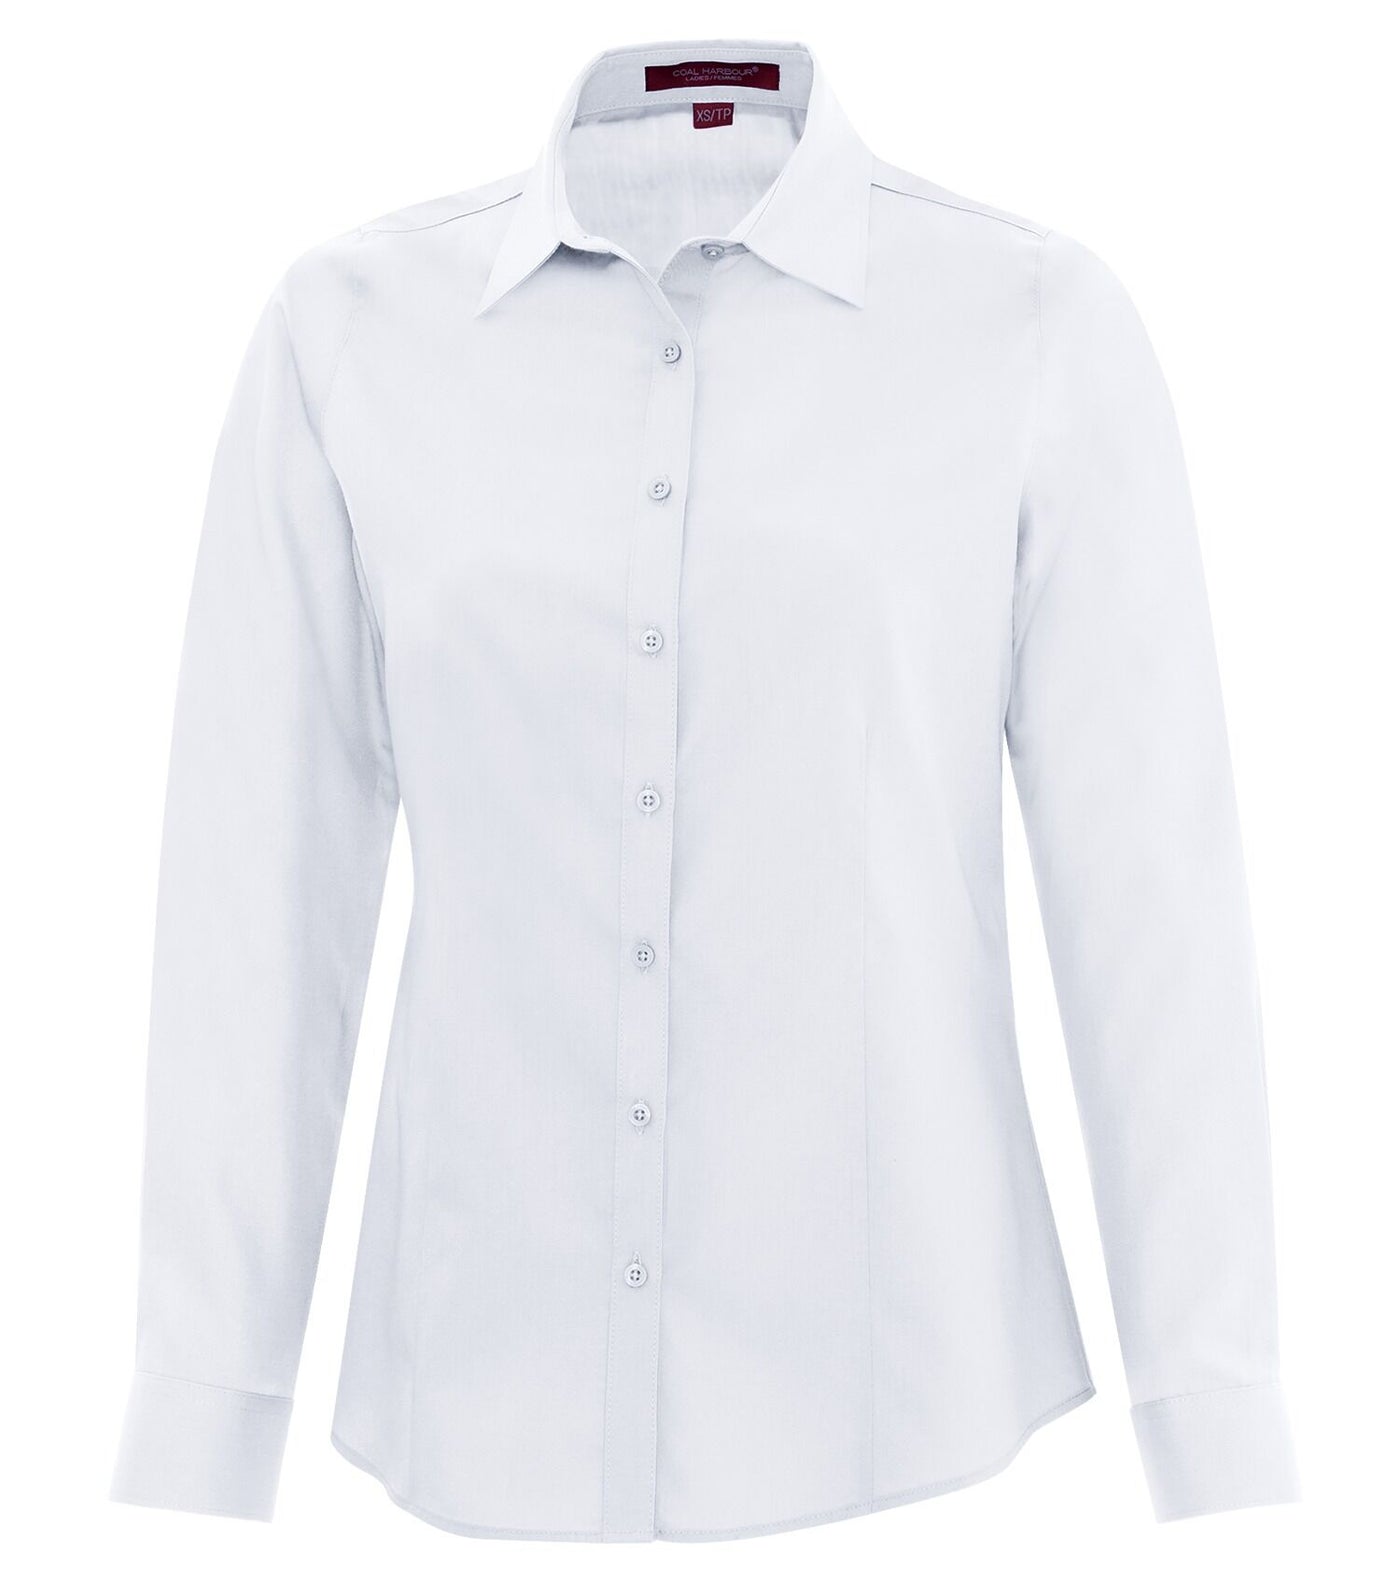 True White - Coal Harbour Women's Long Sleeve Work Shirt